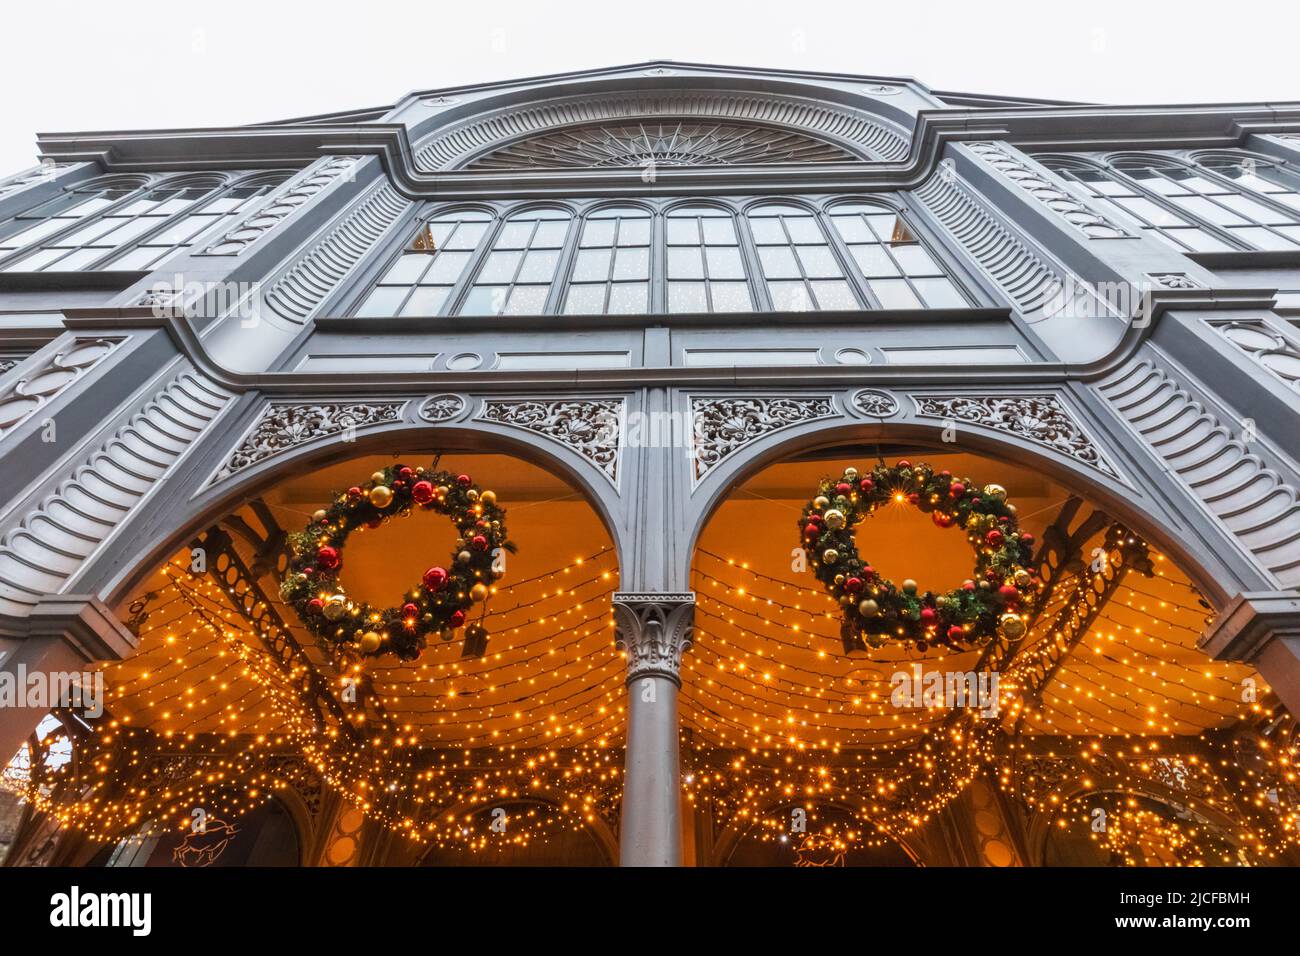 England, London, Southwark, Borough Market with Christmas Decorations Stock Photo